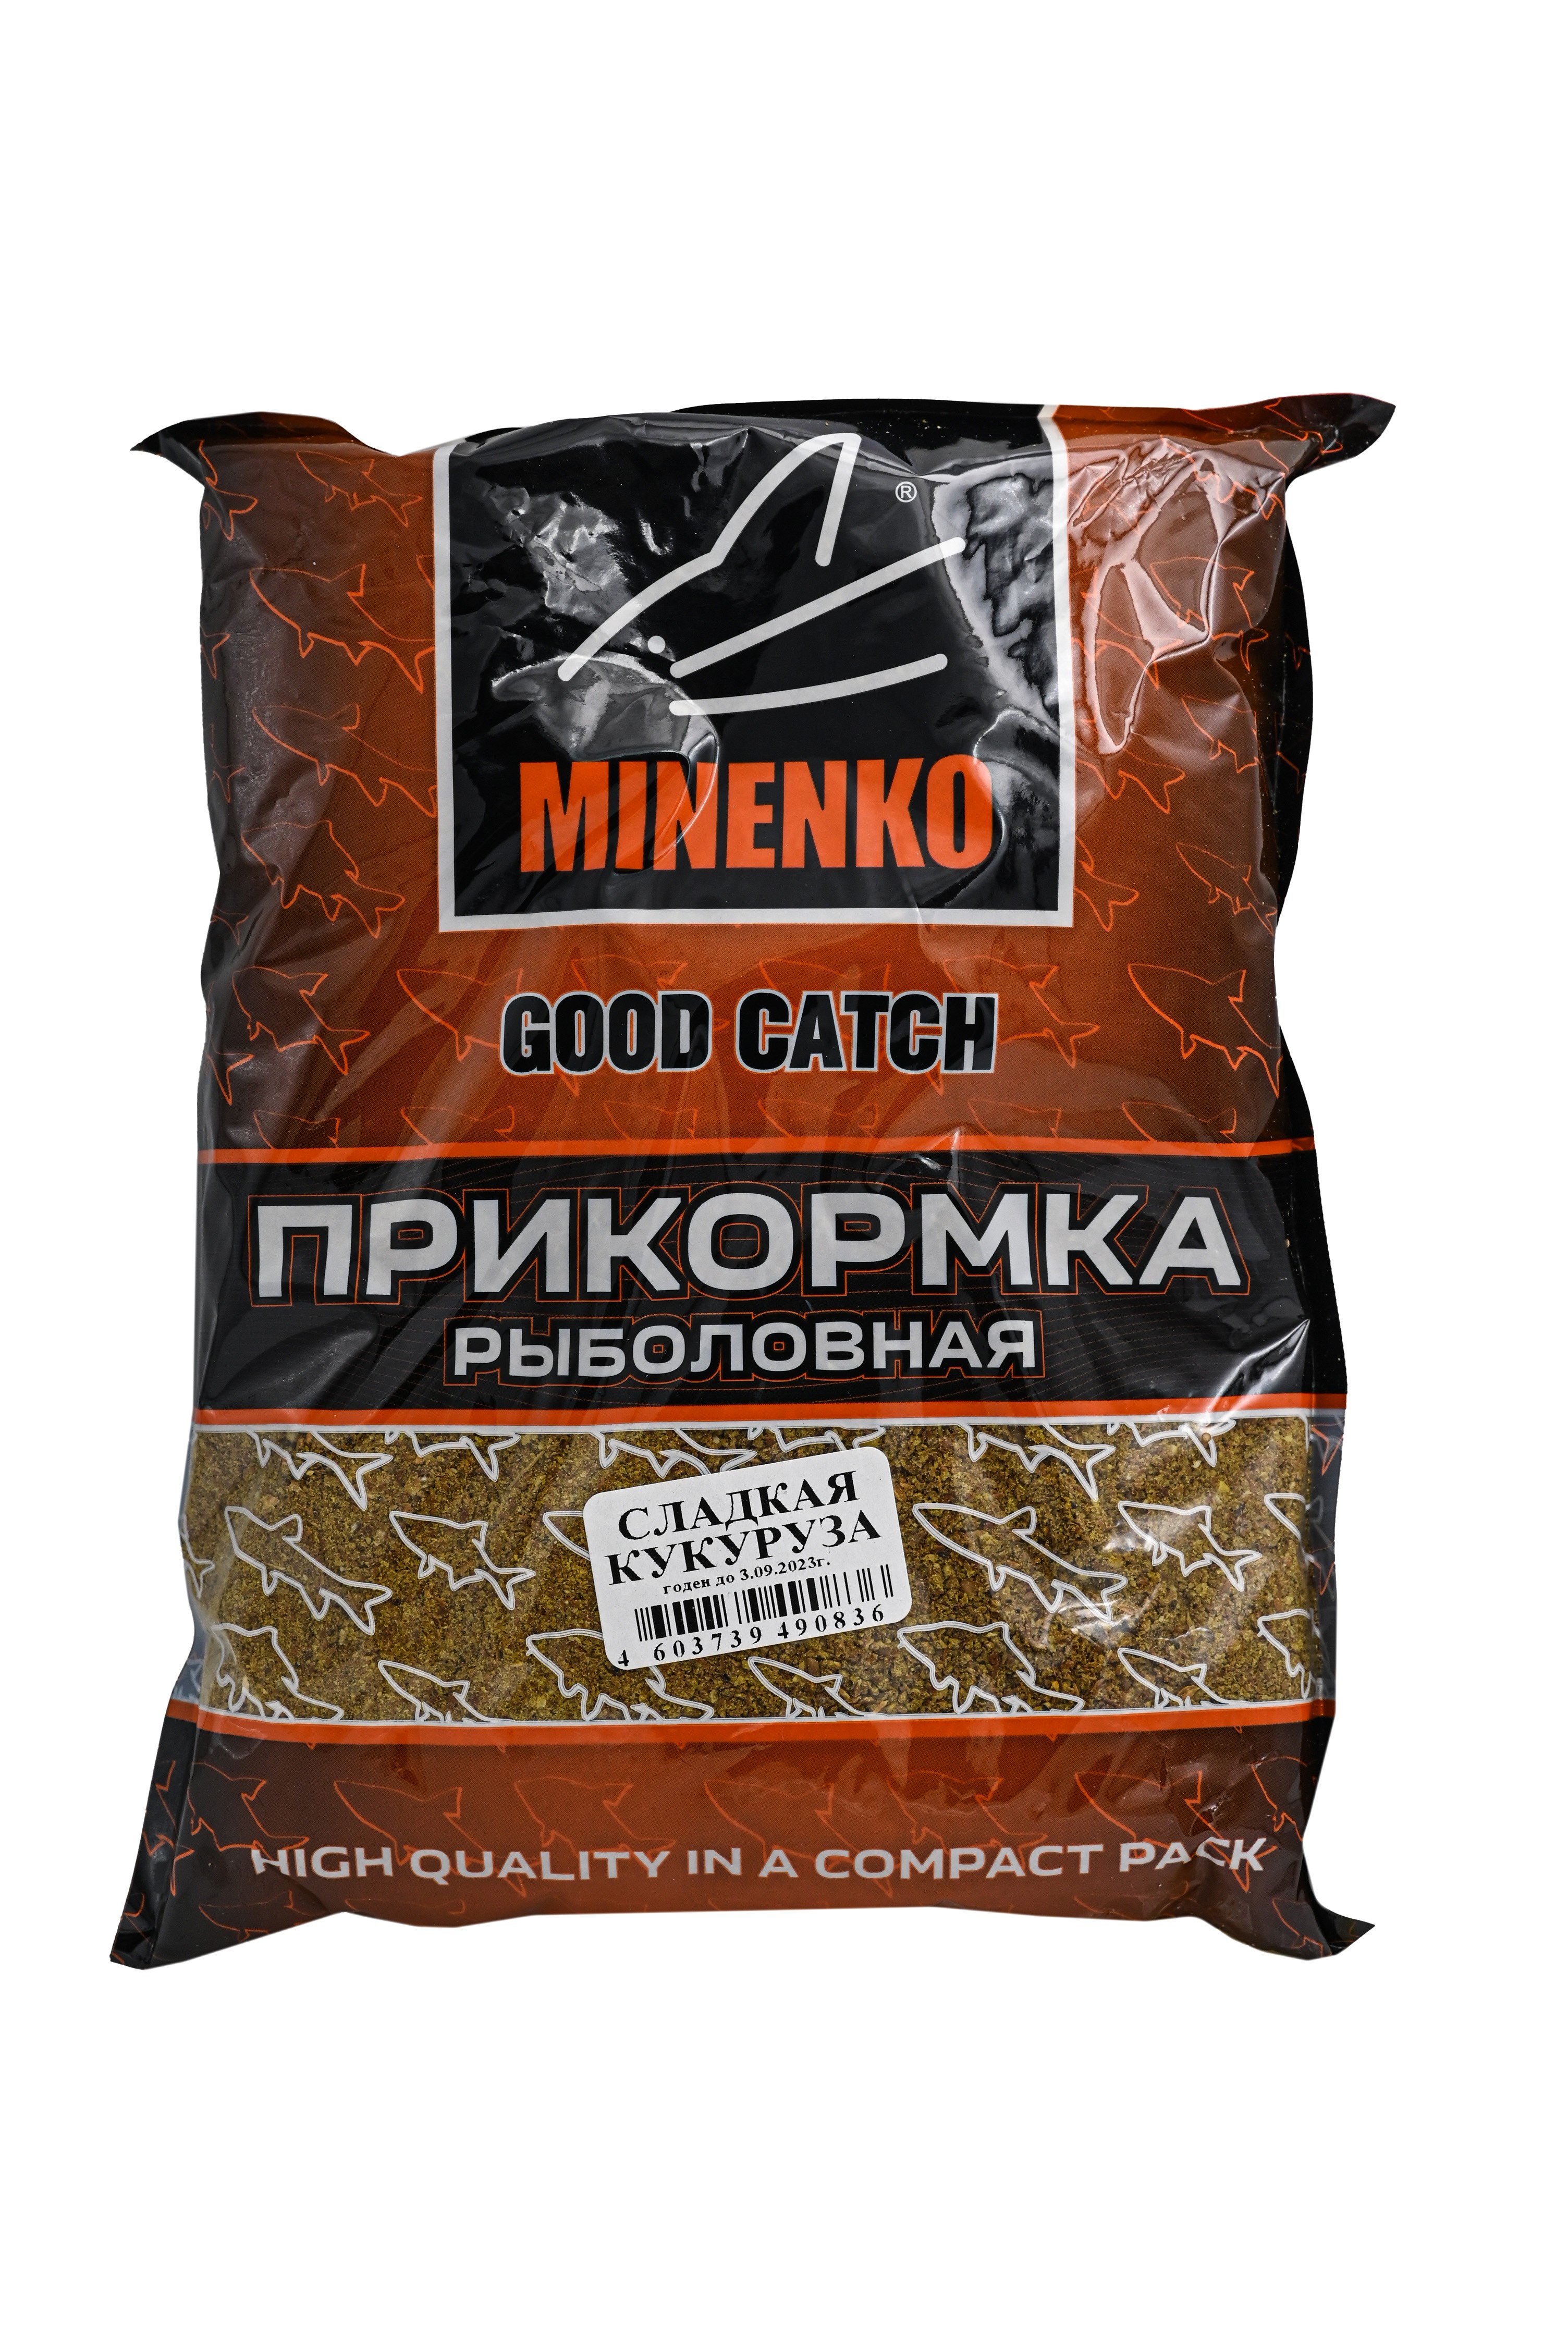 Прикормка MINENKO Good catch сладкая кукуруза 0,7кг - фото 1